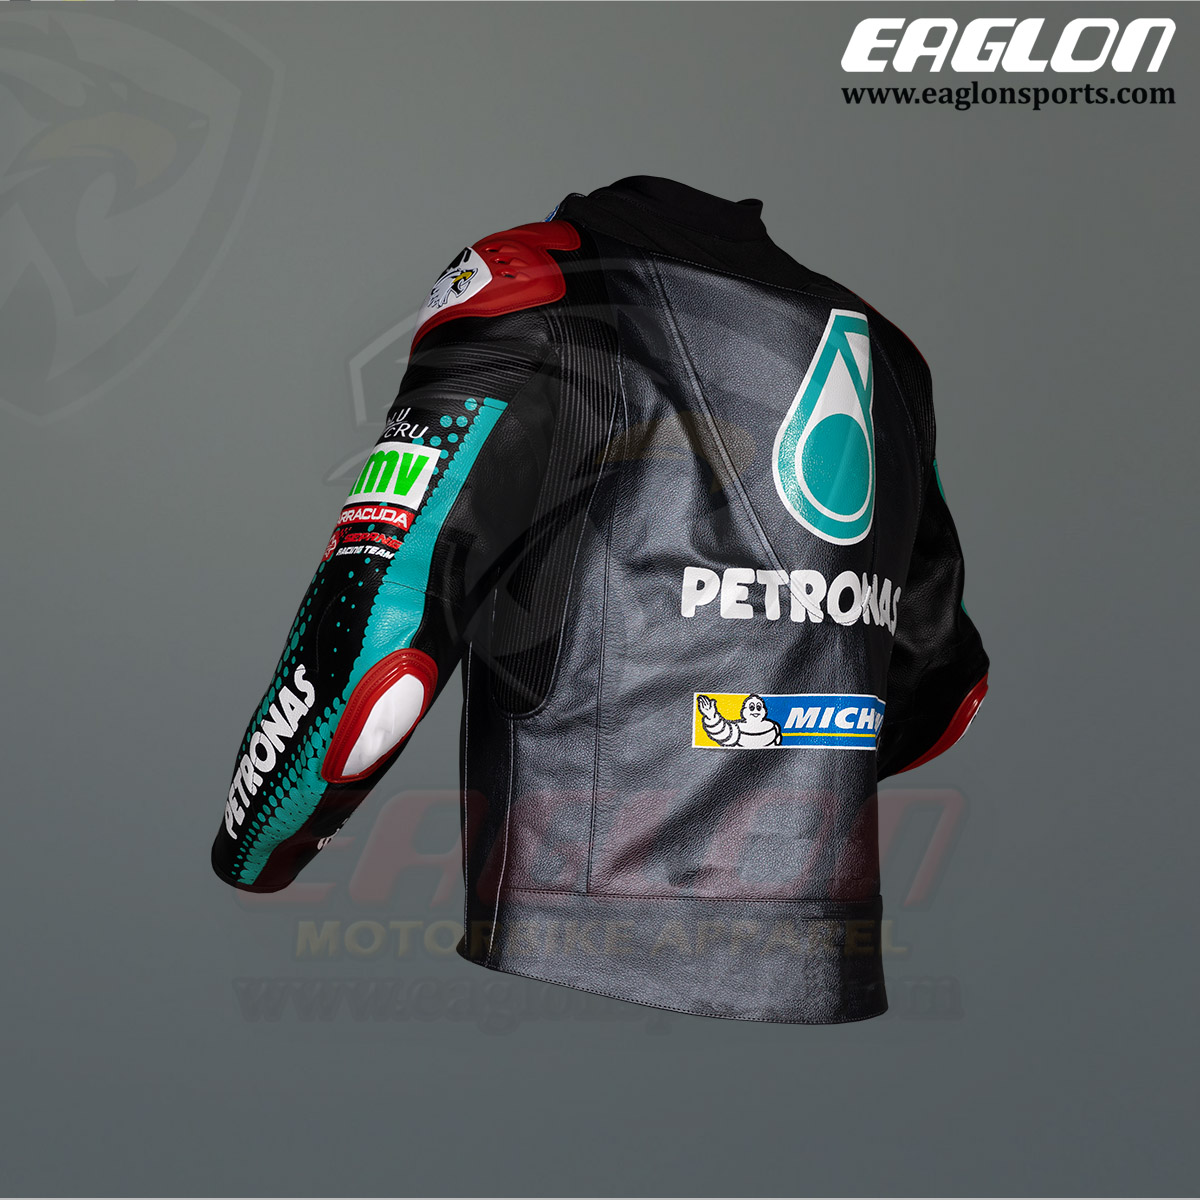 Fabio Quartararo Yamaha Petronas MotoGP 2020 Leather Riding Jacket